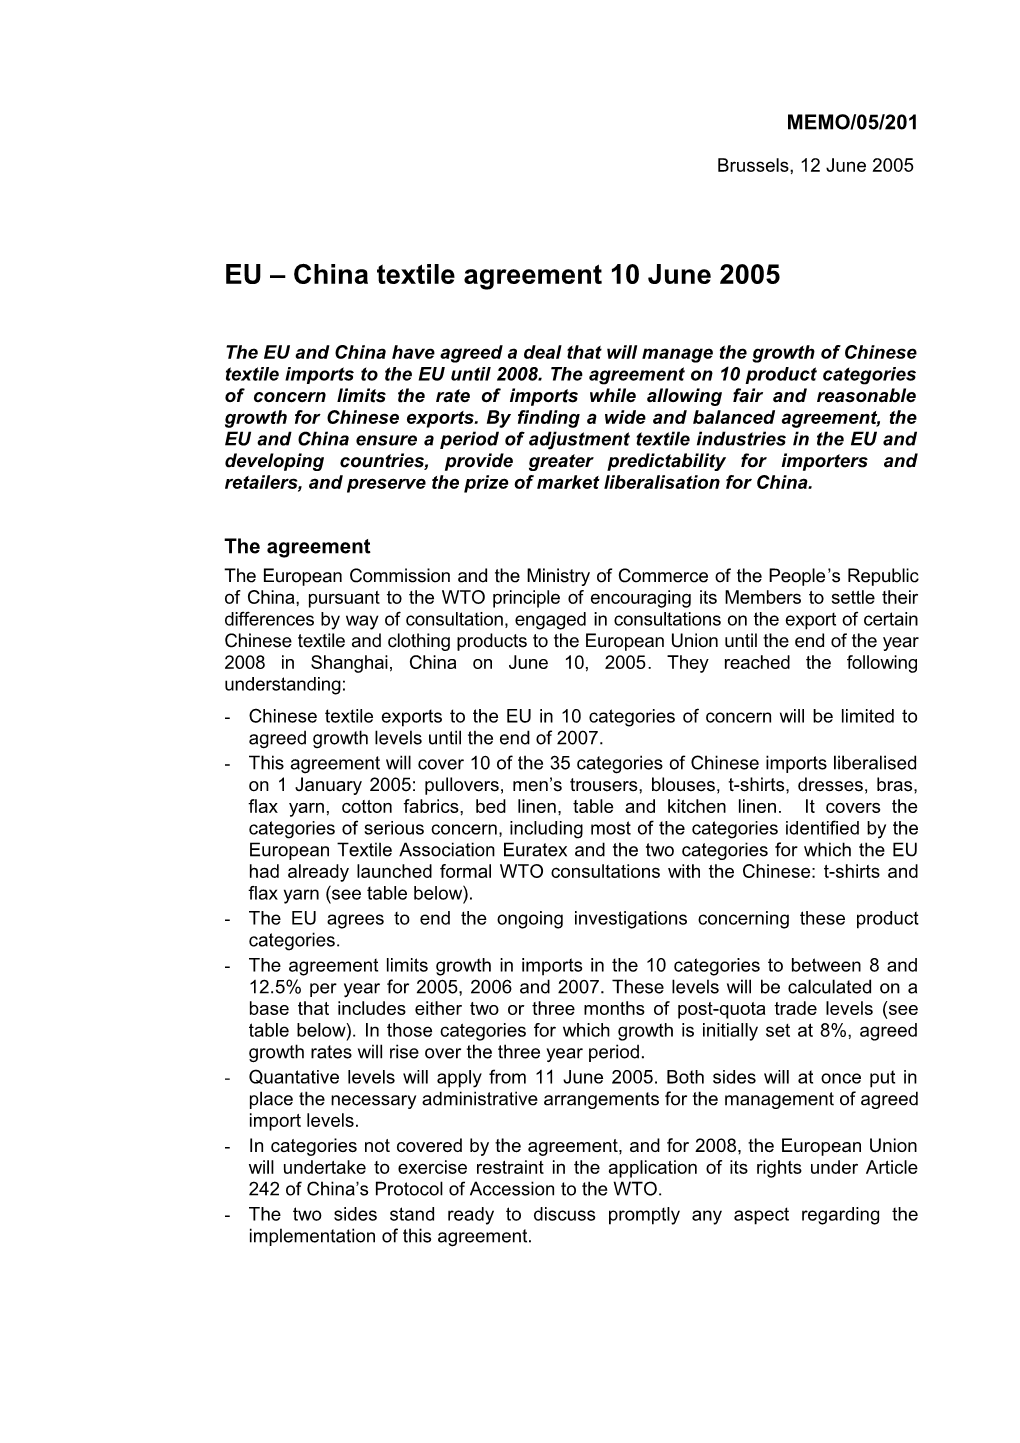 EU China Textile Agreement 10 June 2005